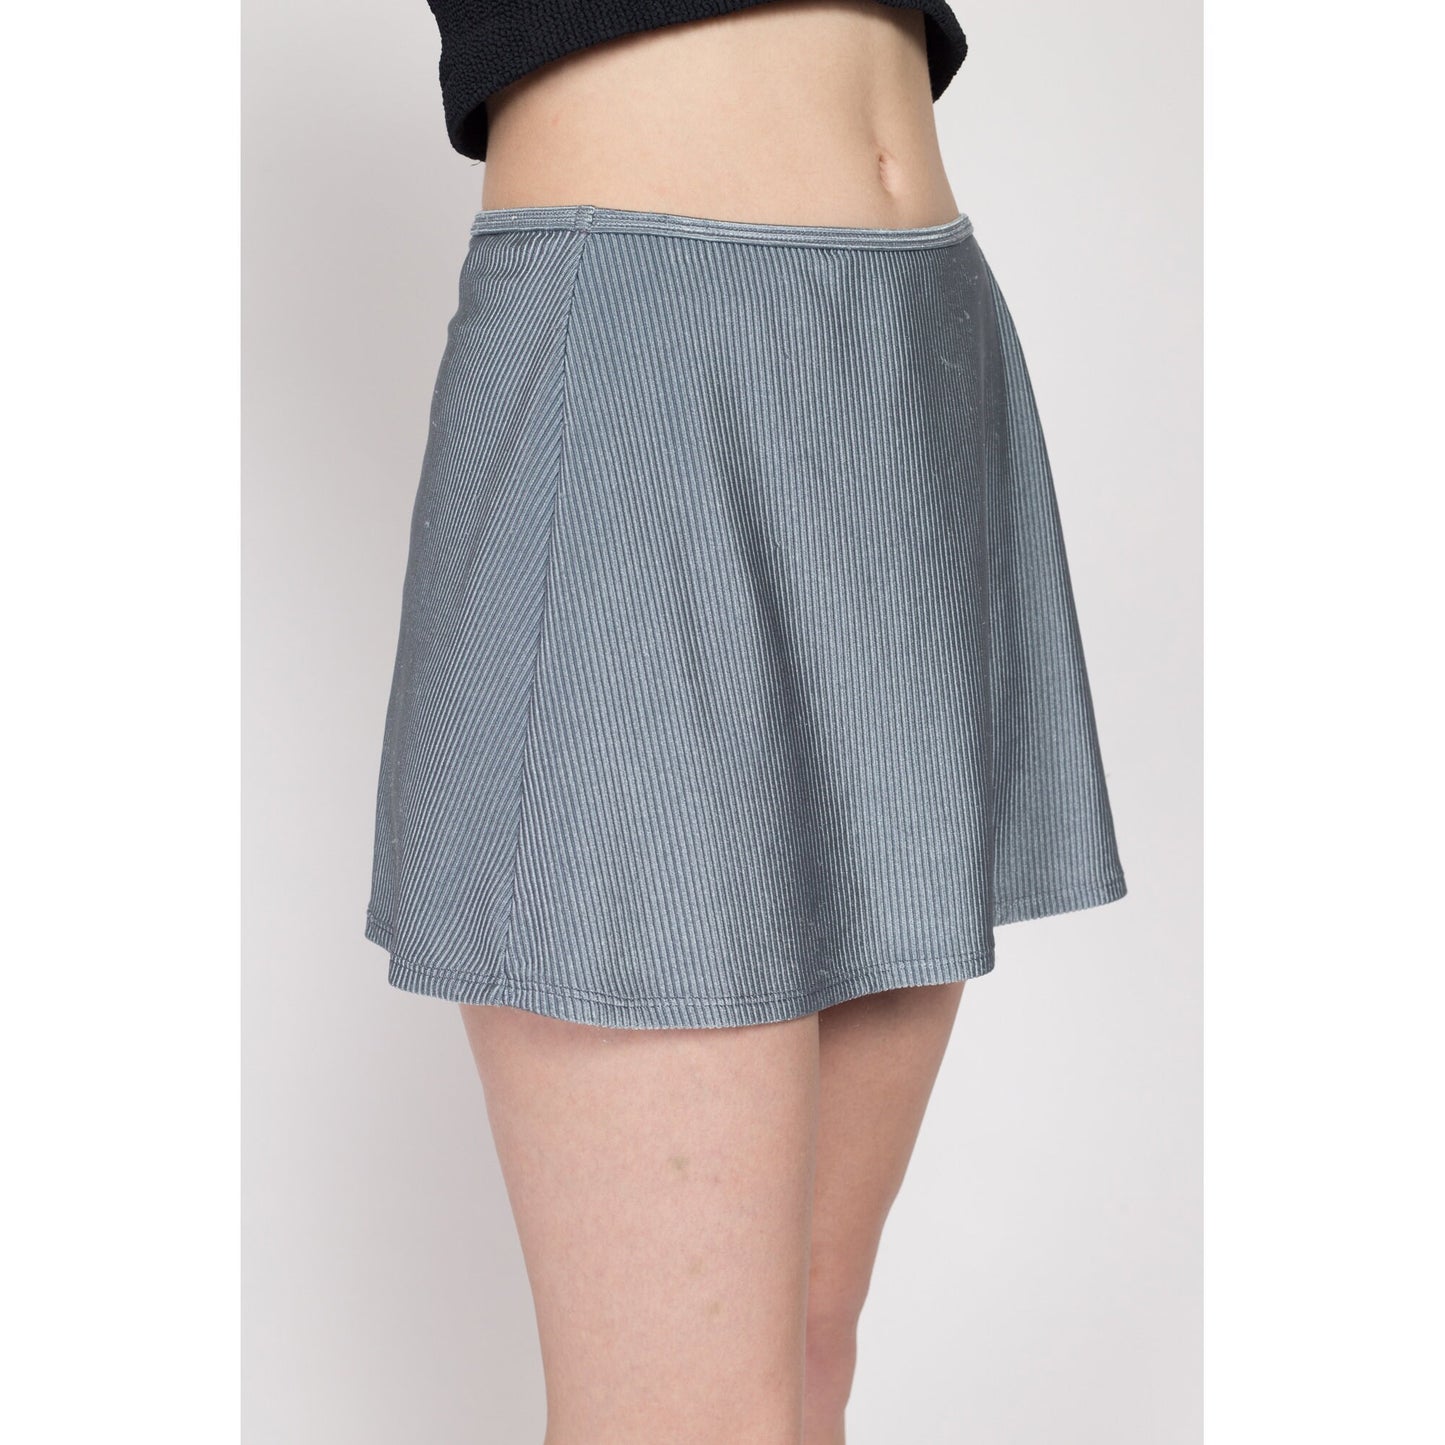 Sm-Med Y2K High Slit Micro Mini Skirt | Vintage Catalina Ribbed Blue Grey Cover Up Miniskirt